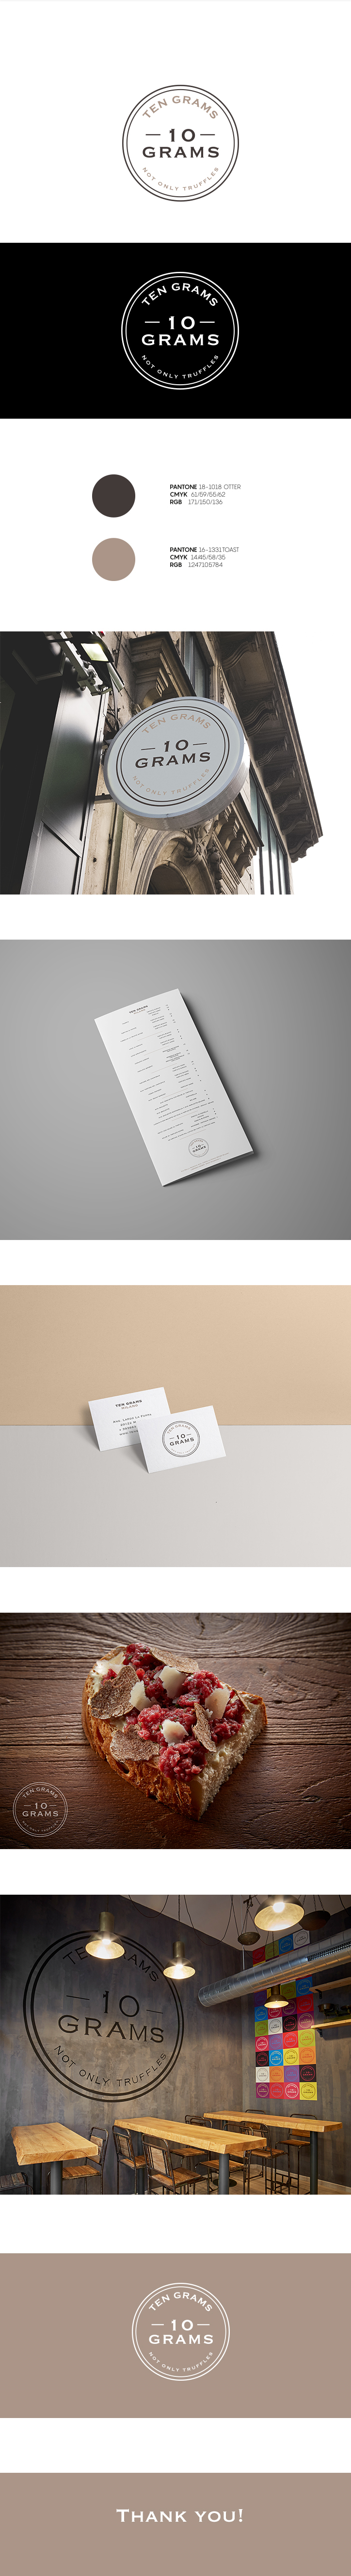 logo branding  restaurants truffles milan graphic Business Cards menu wallsign